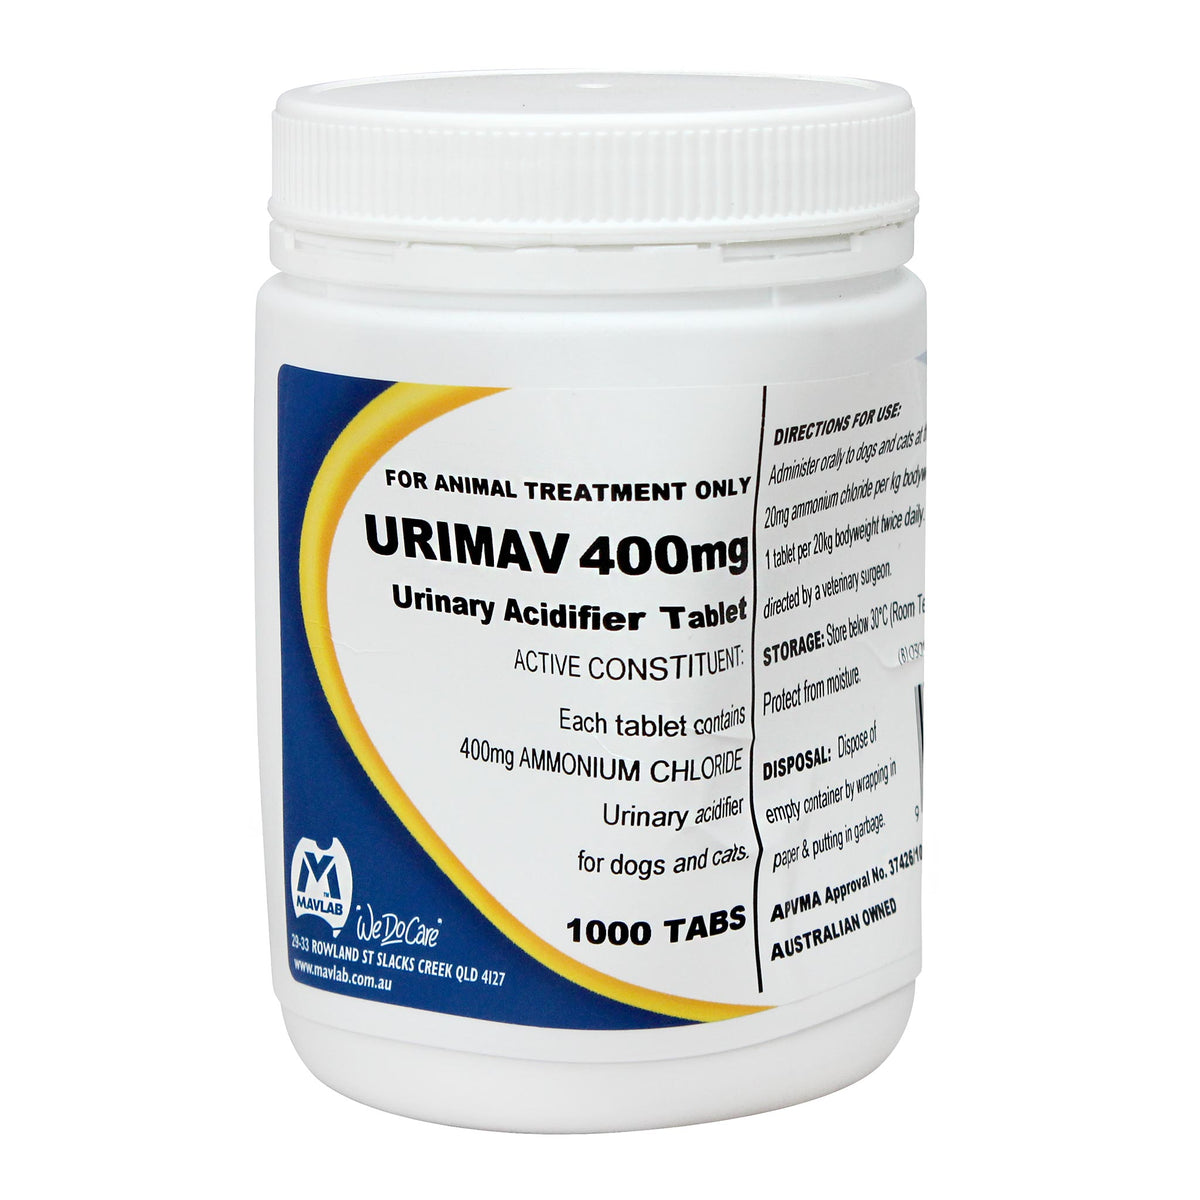 Urimav Urinary Acidifier Tablets